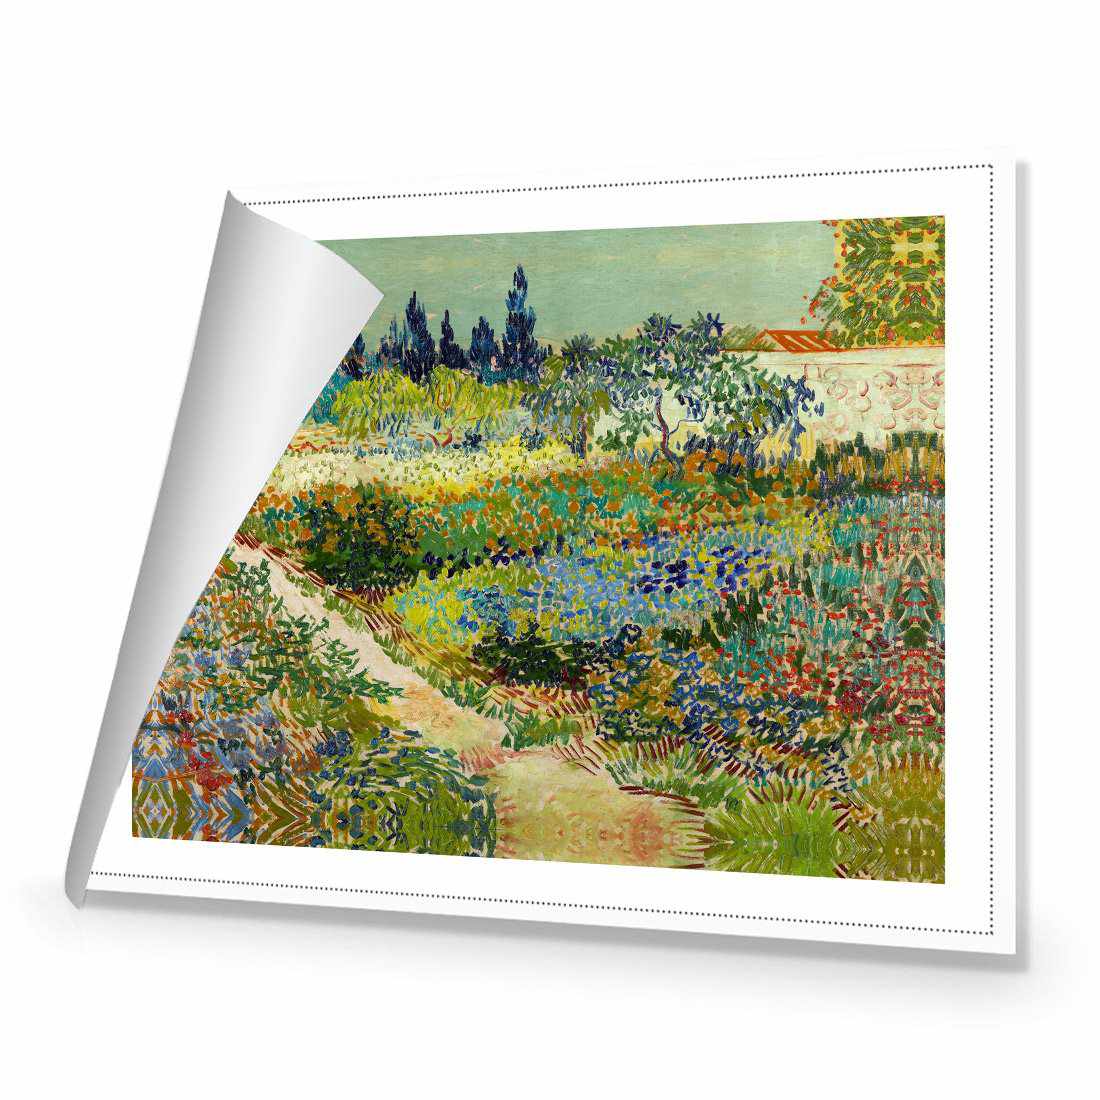 Garden At Arles - Van Gogh Canvas Art-Canvas-Wall Art Designs-45x30cm-Rolled Canvas-Wall Art Designs